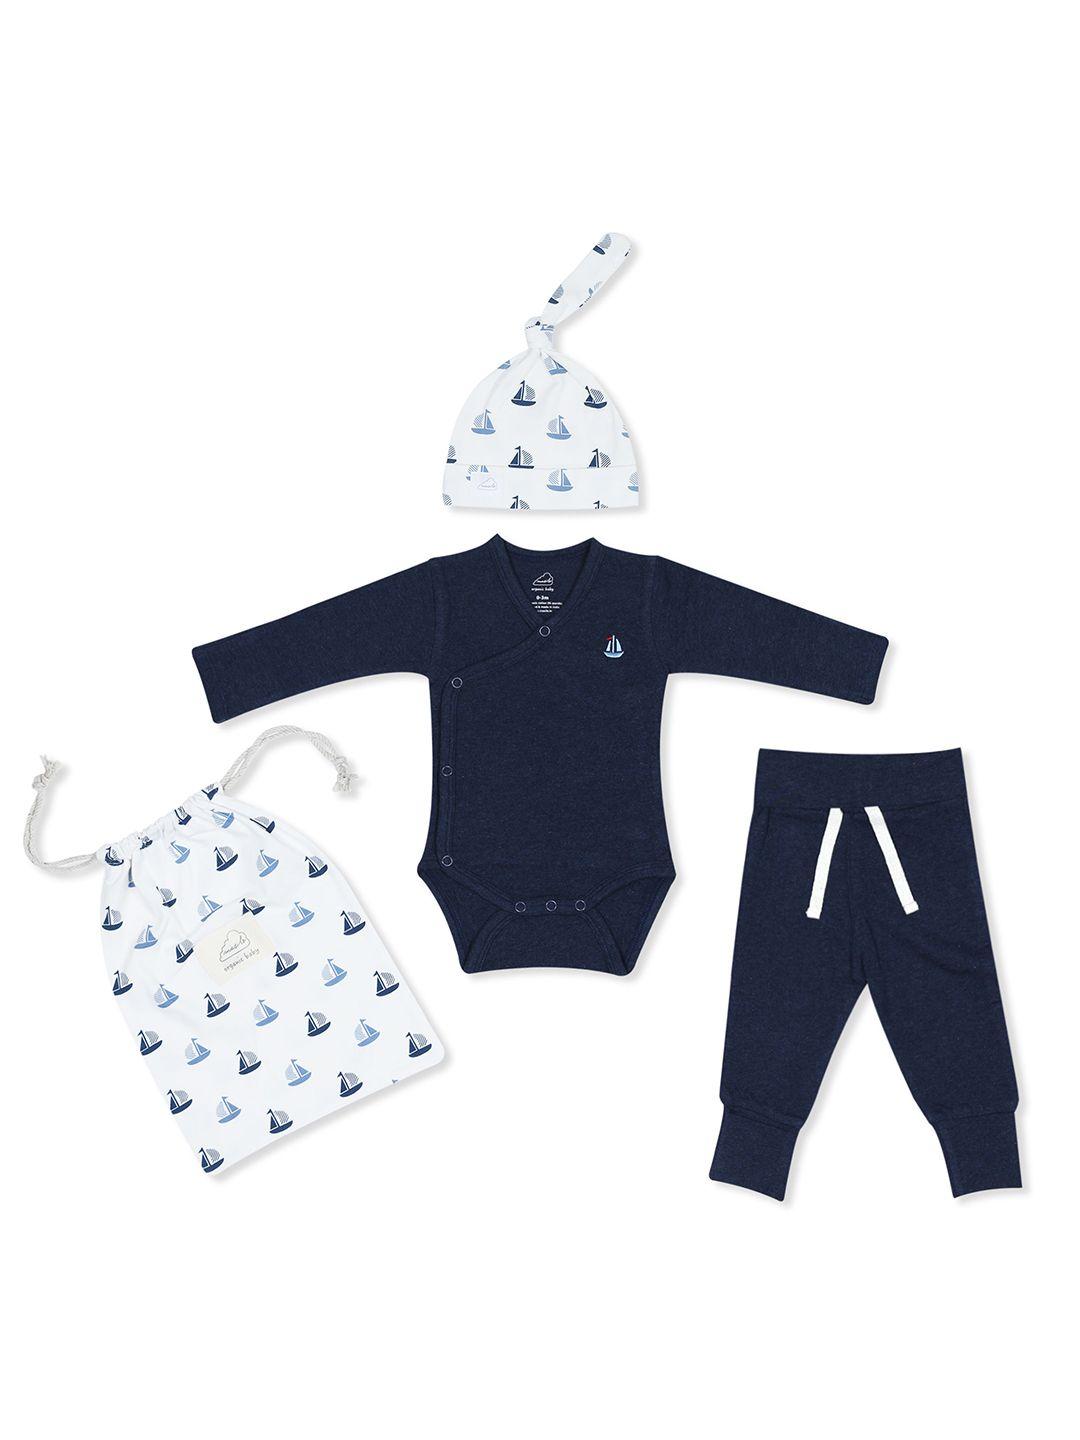 masilo boys navy blue & white cotton clothing set